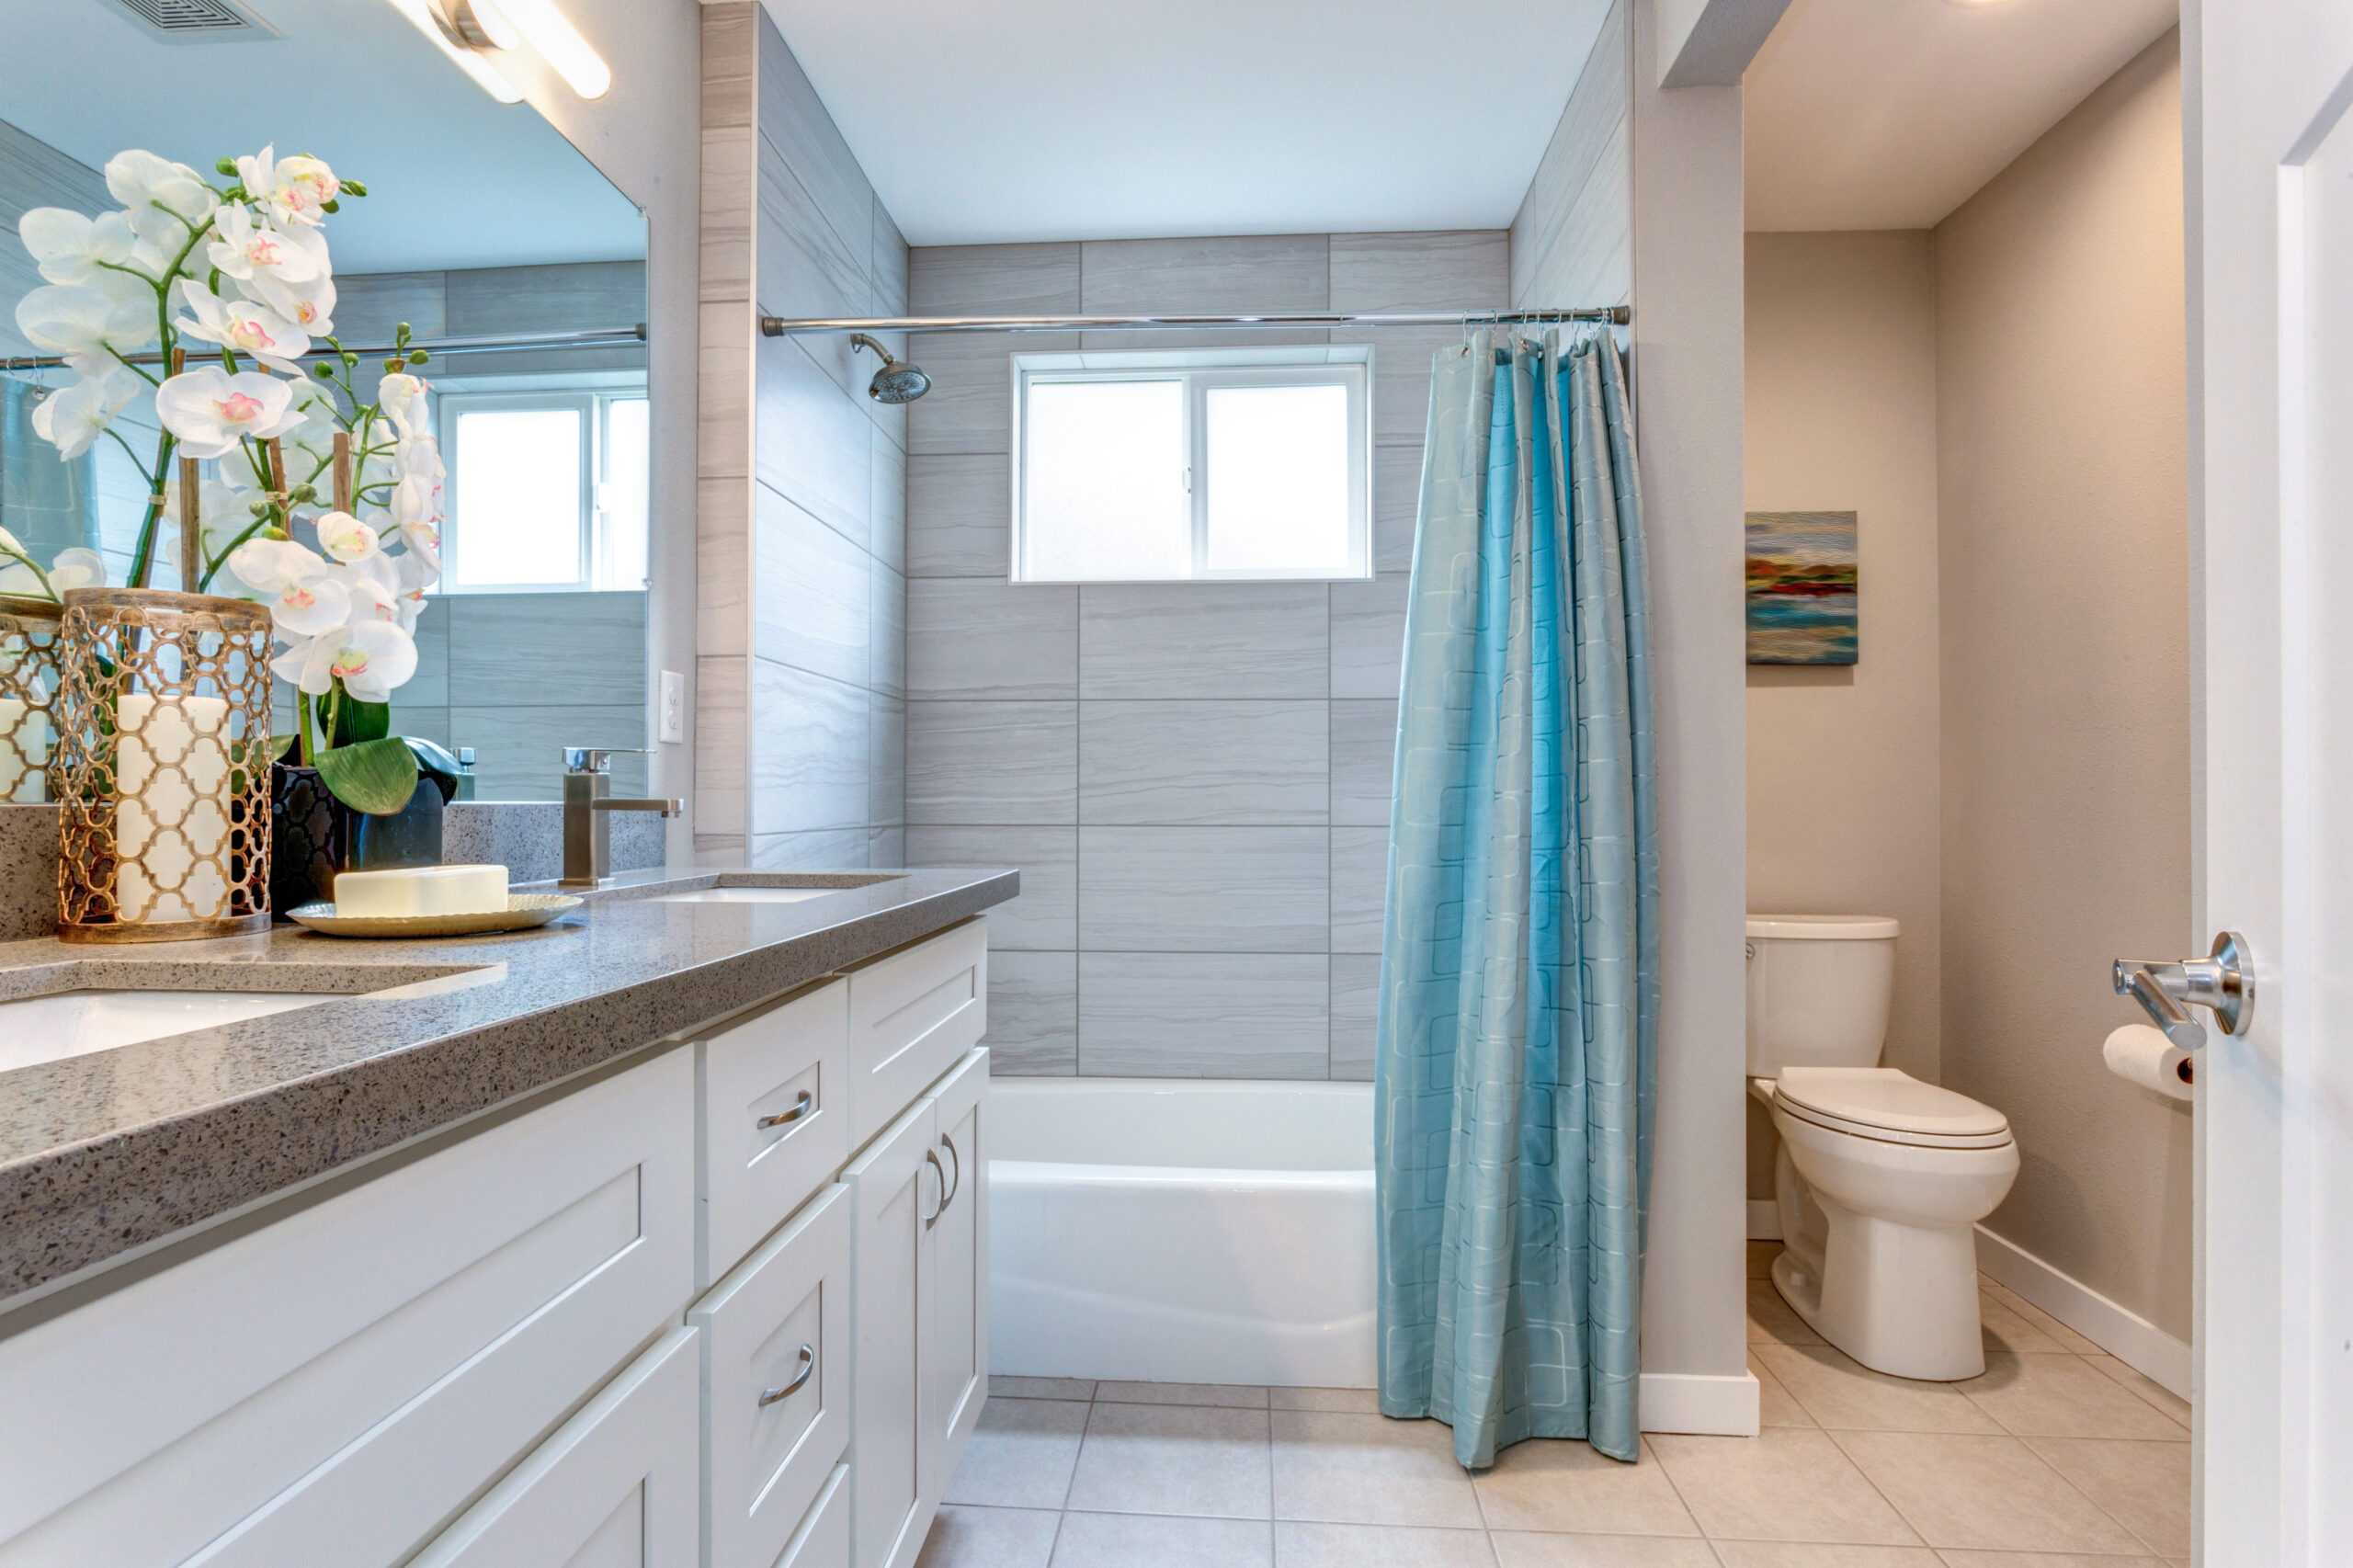 #1 bathroom remodels tulsa ok professional bathroom cabinetry renovation